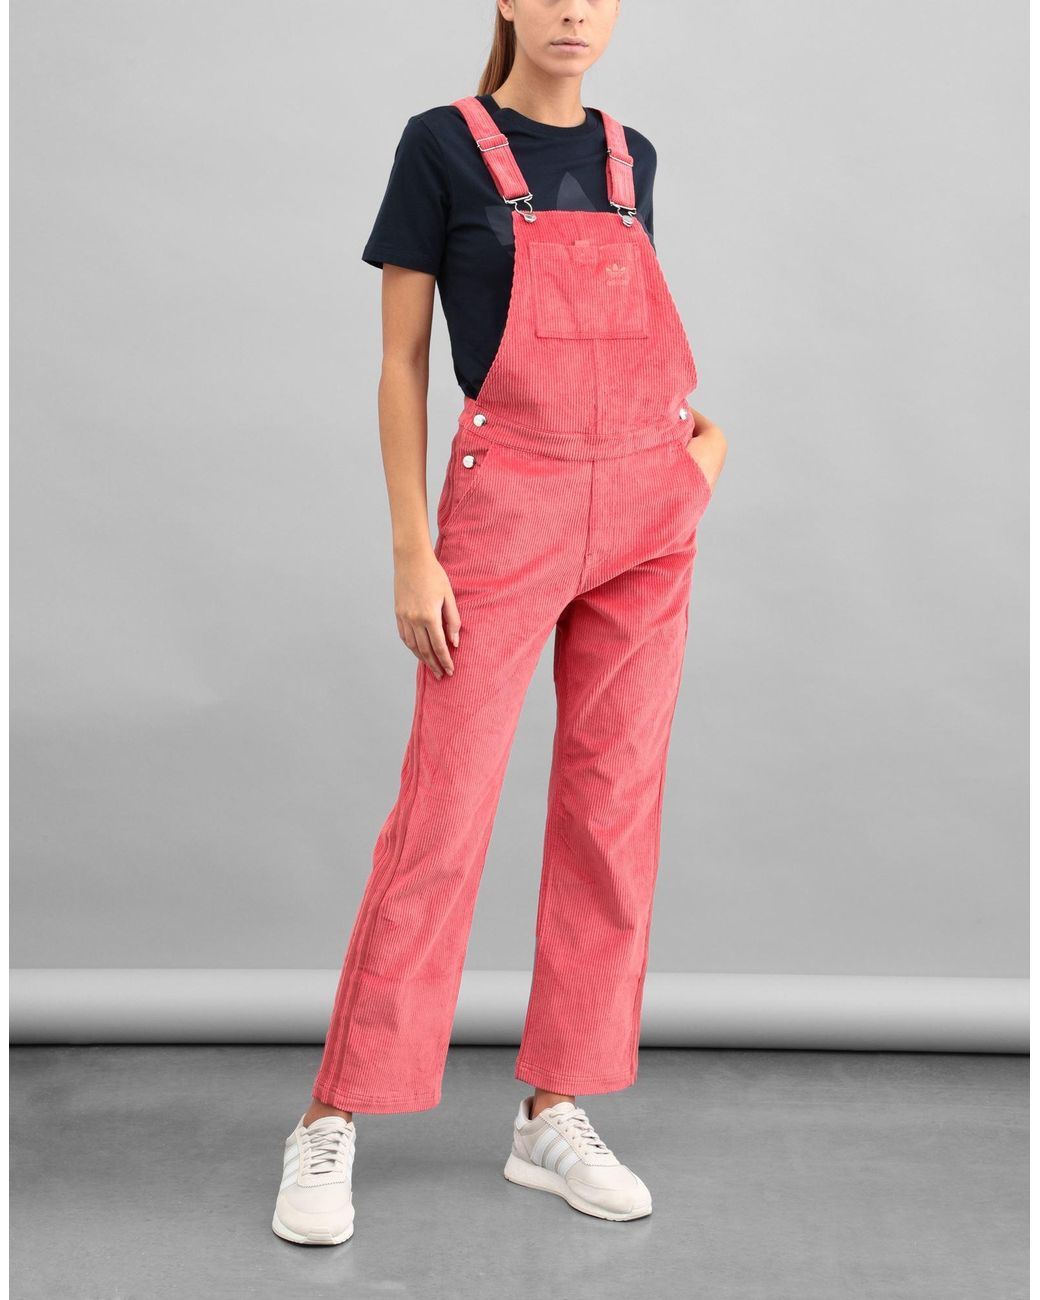 adidas Originals Overalls in Pink | Lyst